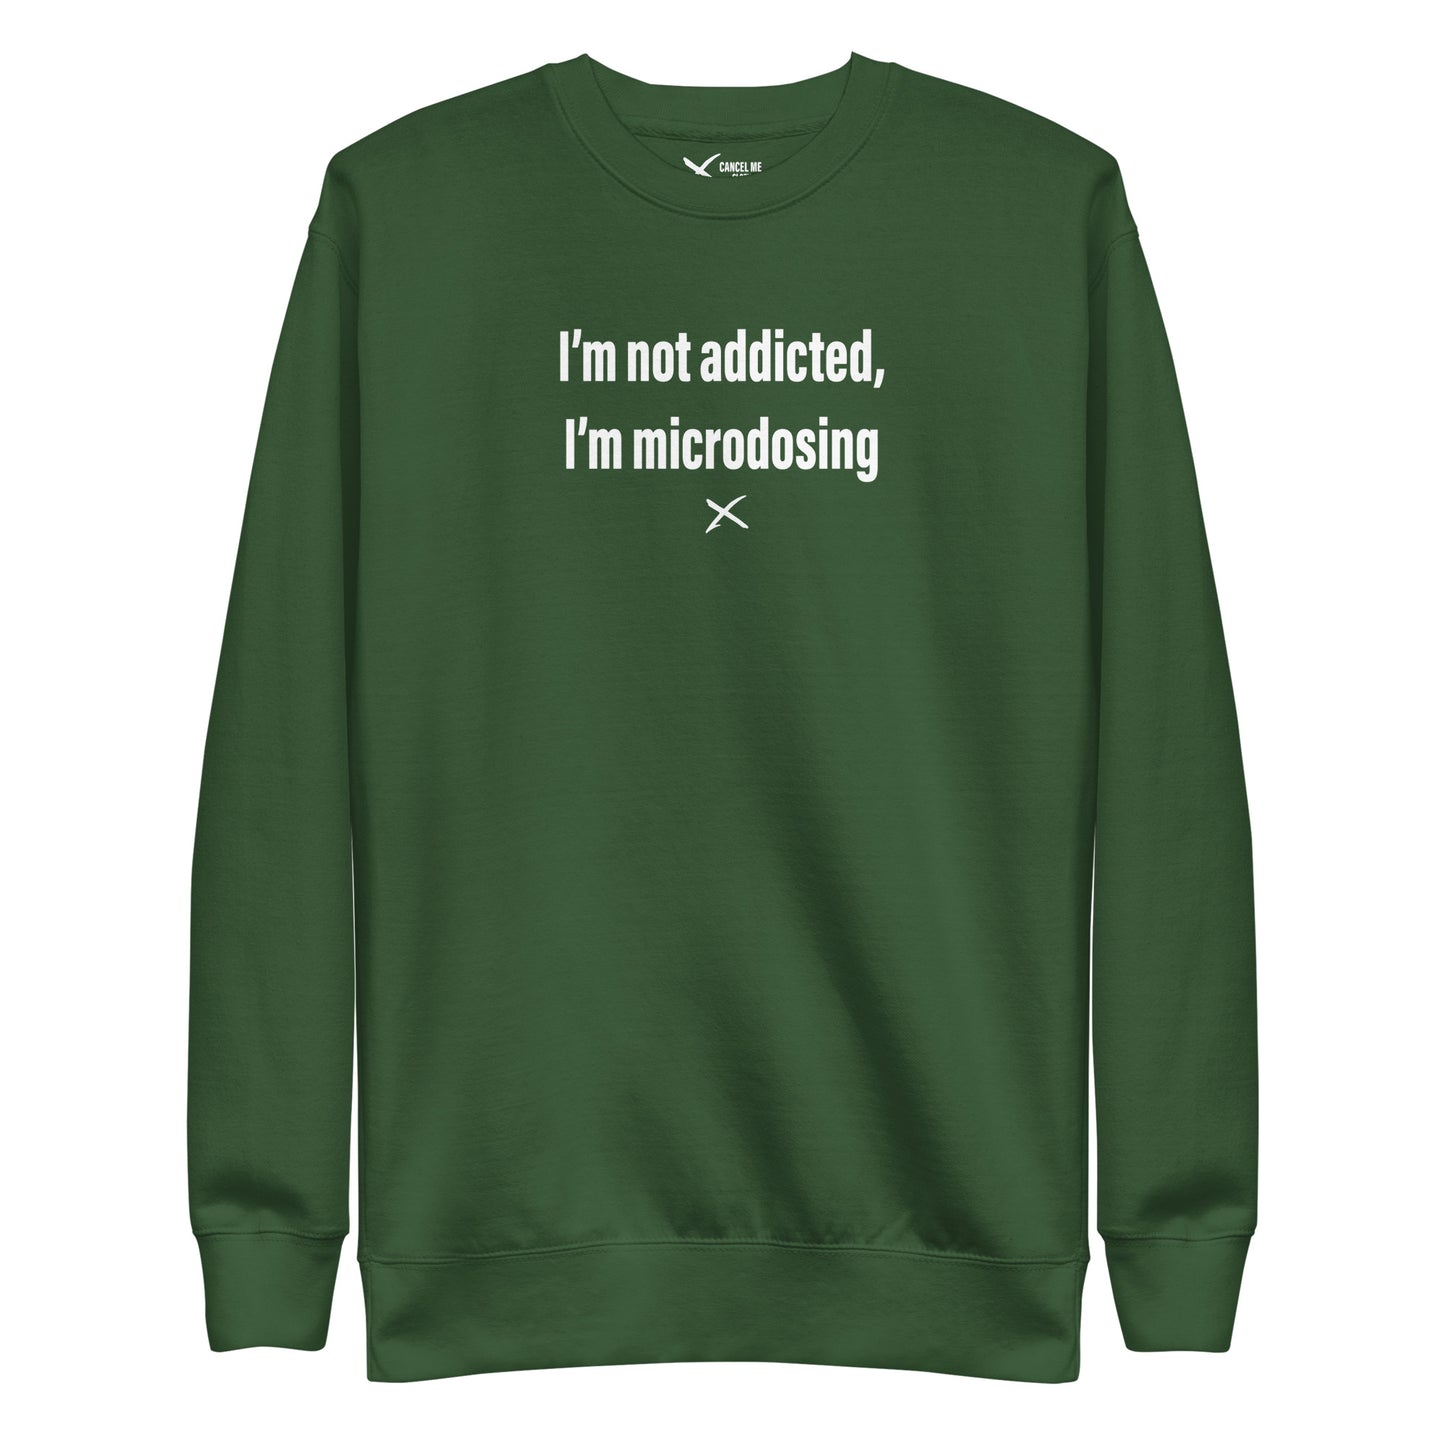 I'm not addicted, I'm microdosing - Sweatshirt